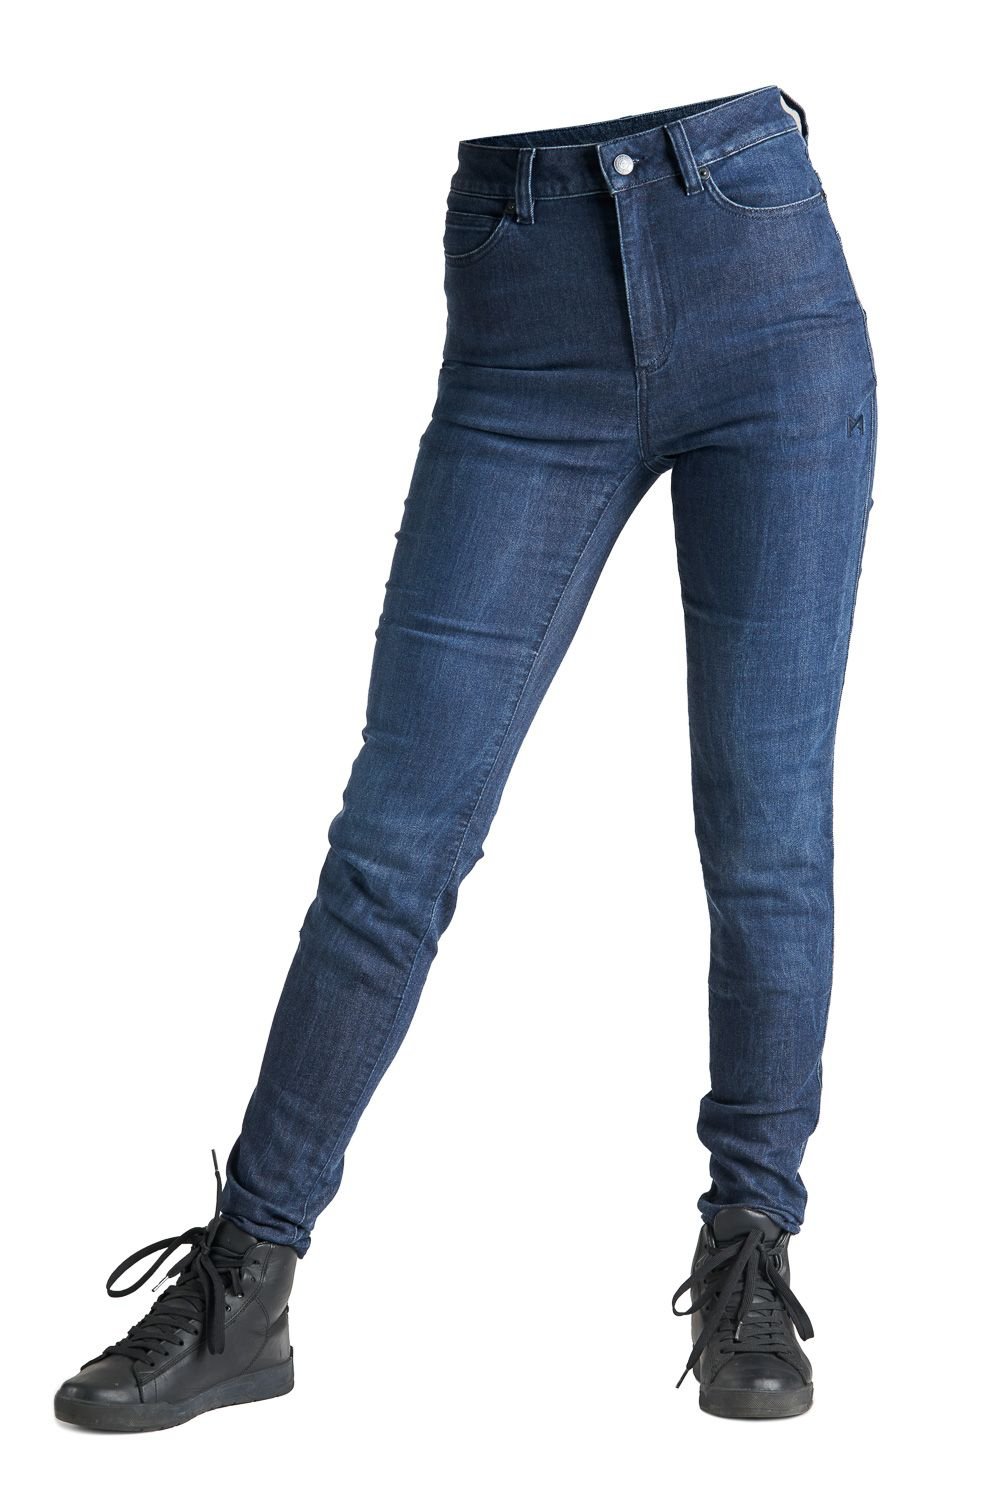 Image of Pando Moto Kusari Cor 02 Women Motorcycle Jeans Skinny-Fit Cordura Size W32/L32 ID 785104950535